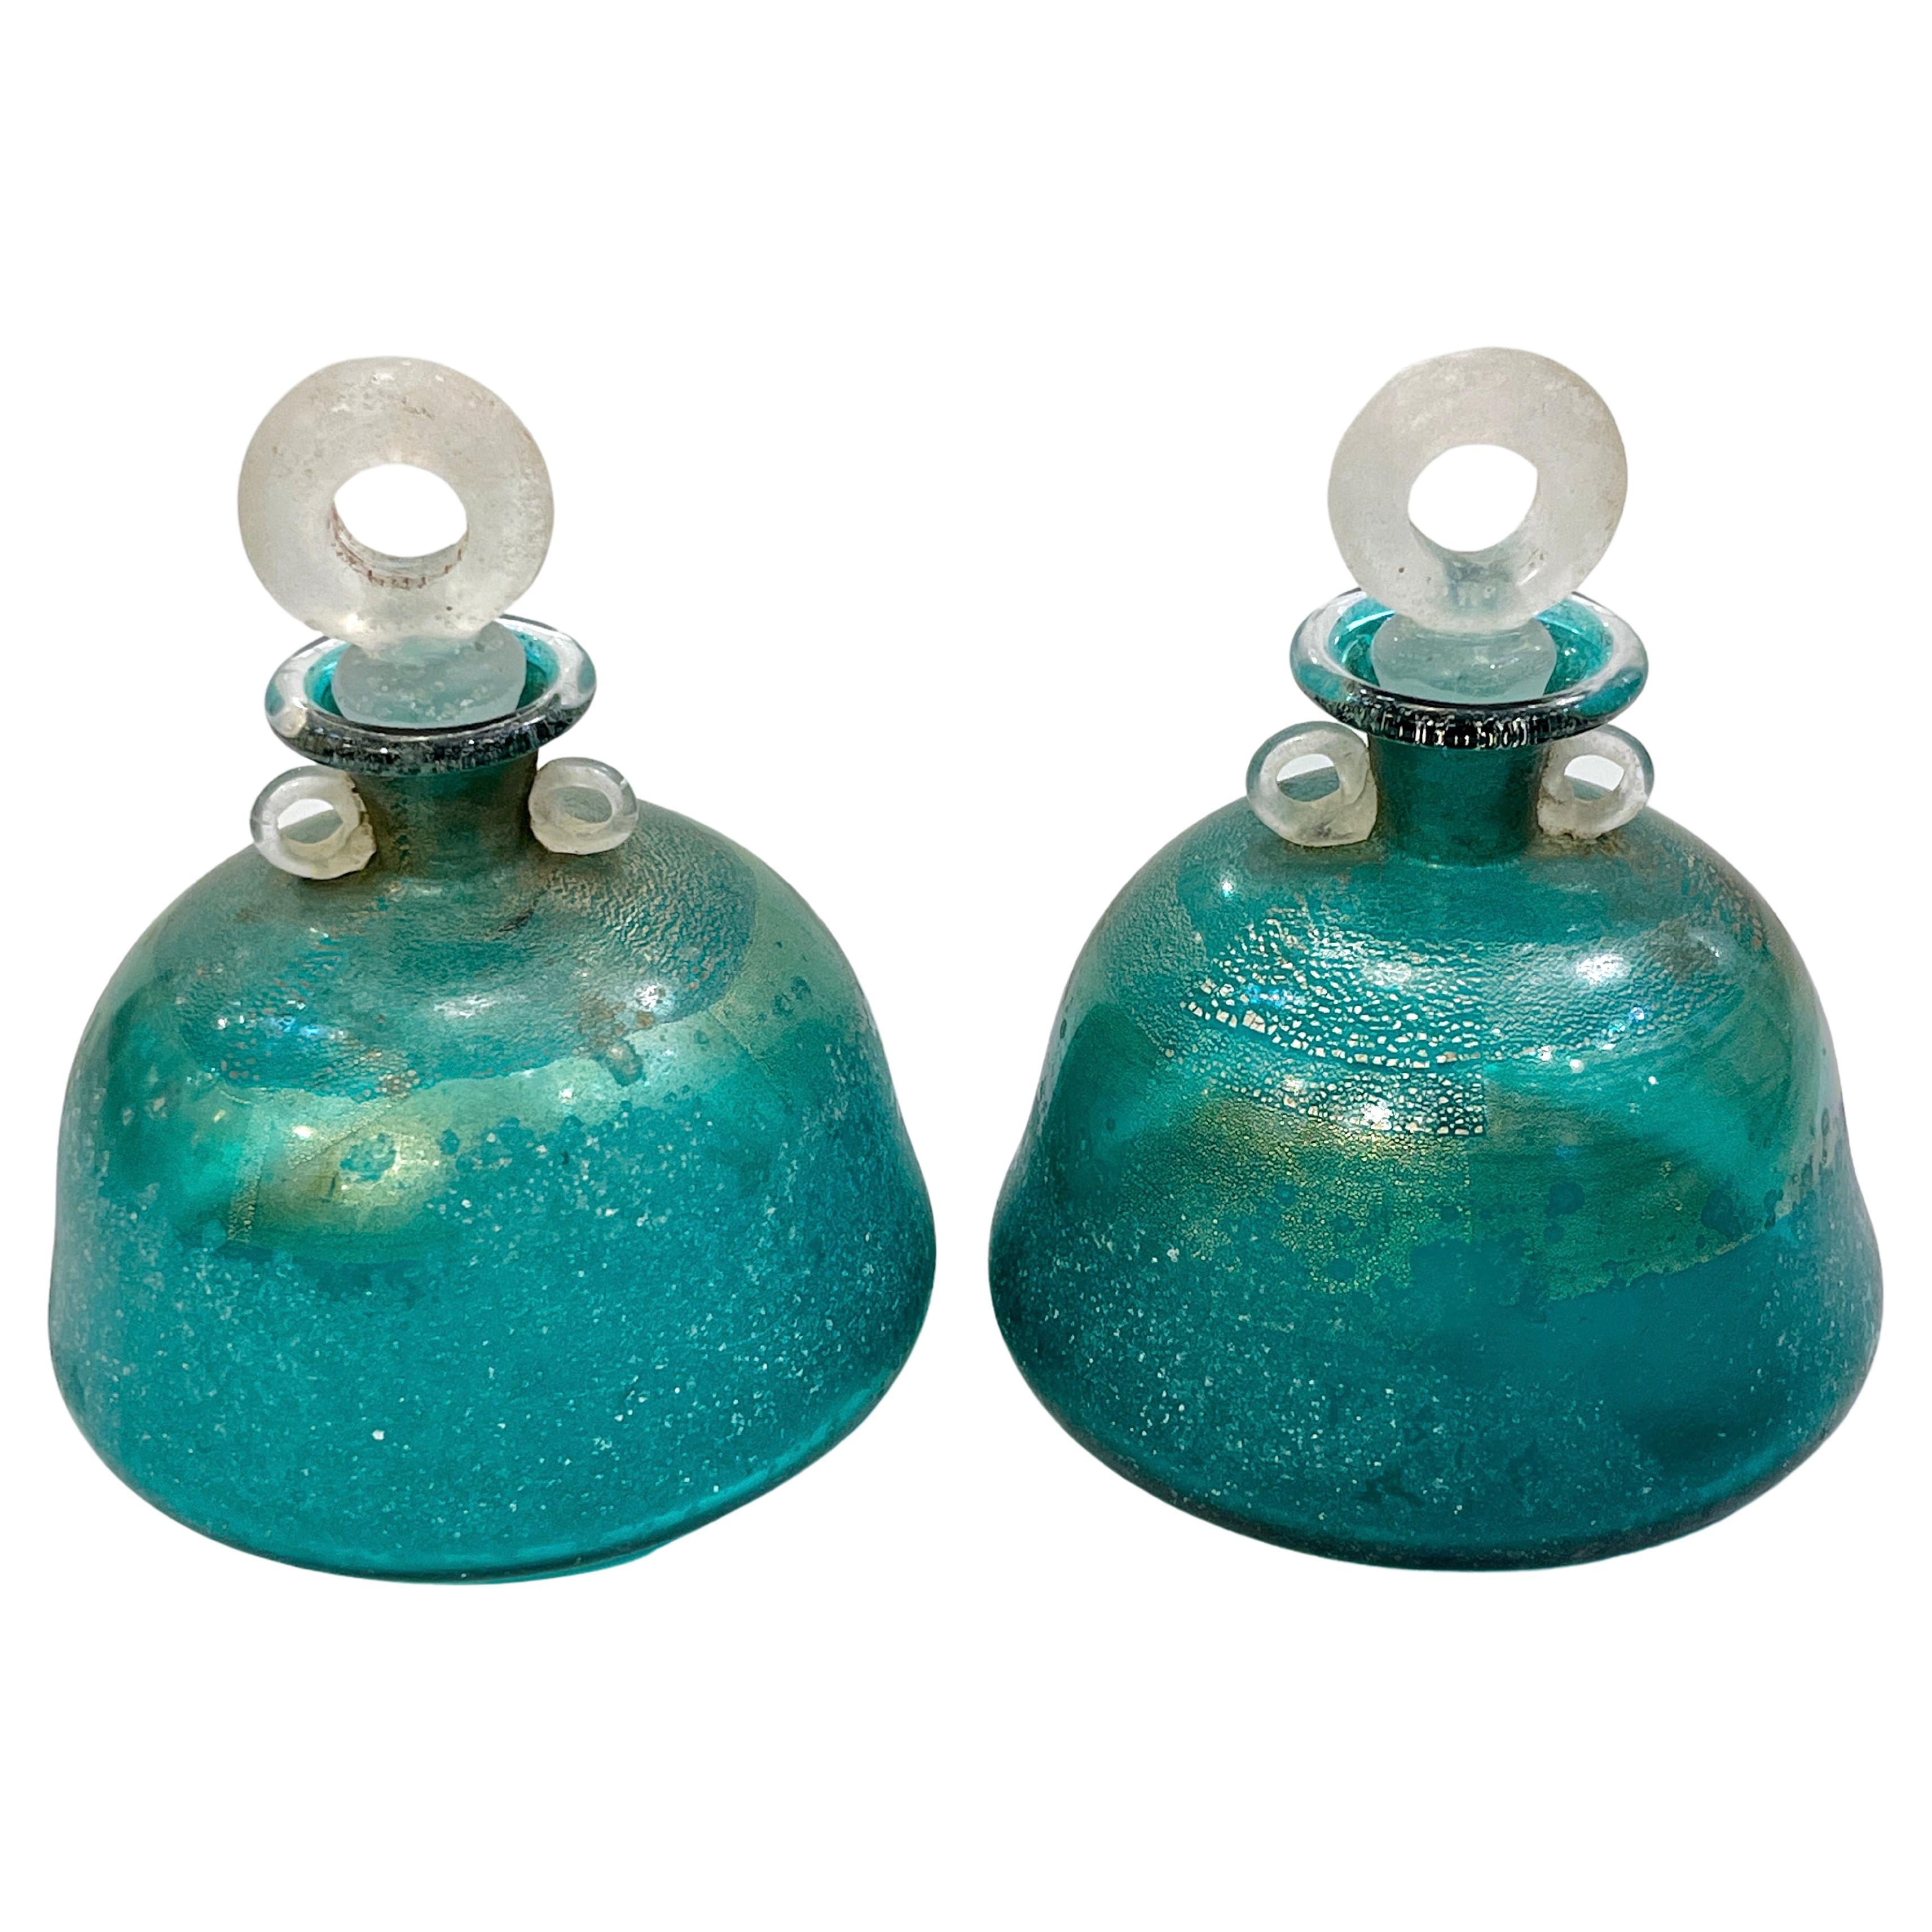 1970 Italian Signed Scavo Murano Glass Green Bottles with Handles and Stoppers (Bouteilles vertes en verre de Murano signées Scavo avec poignées et bouchons) en vente